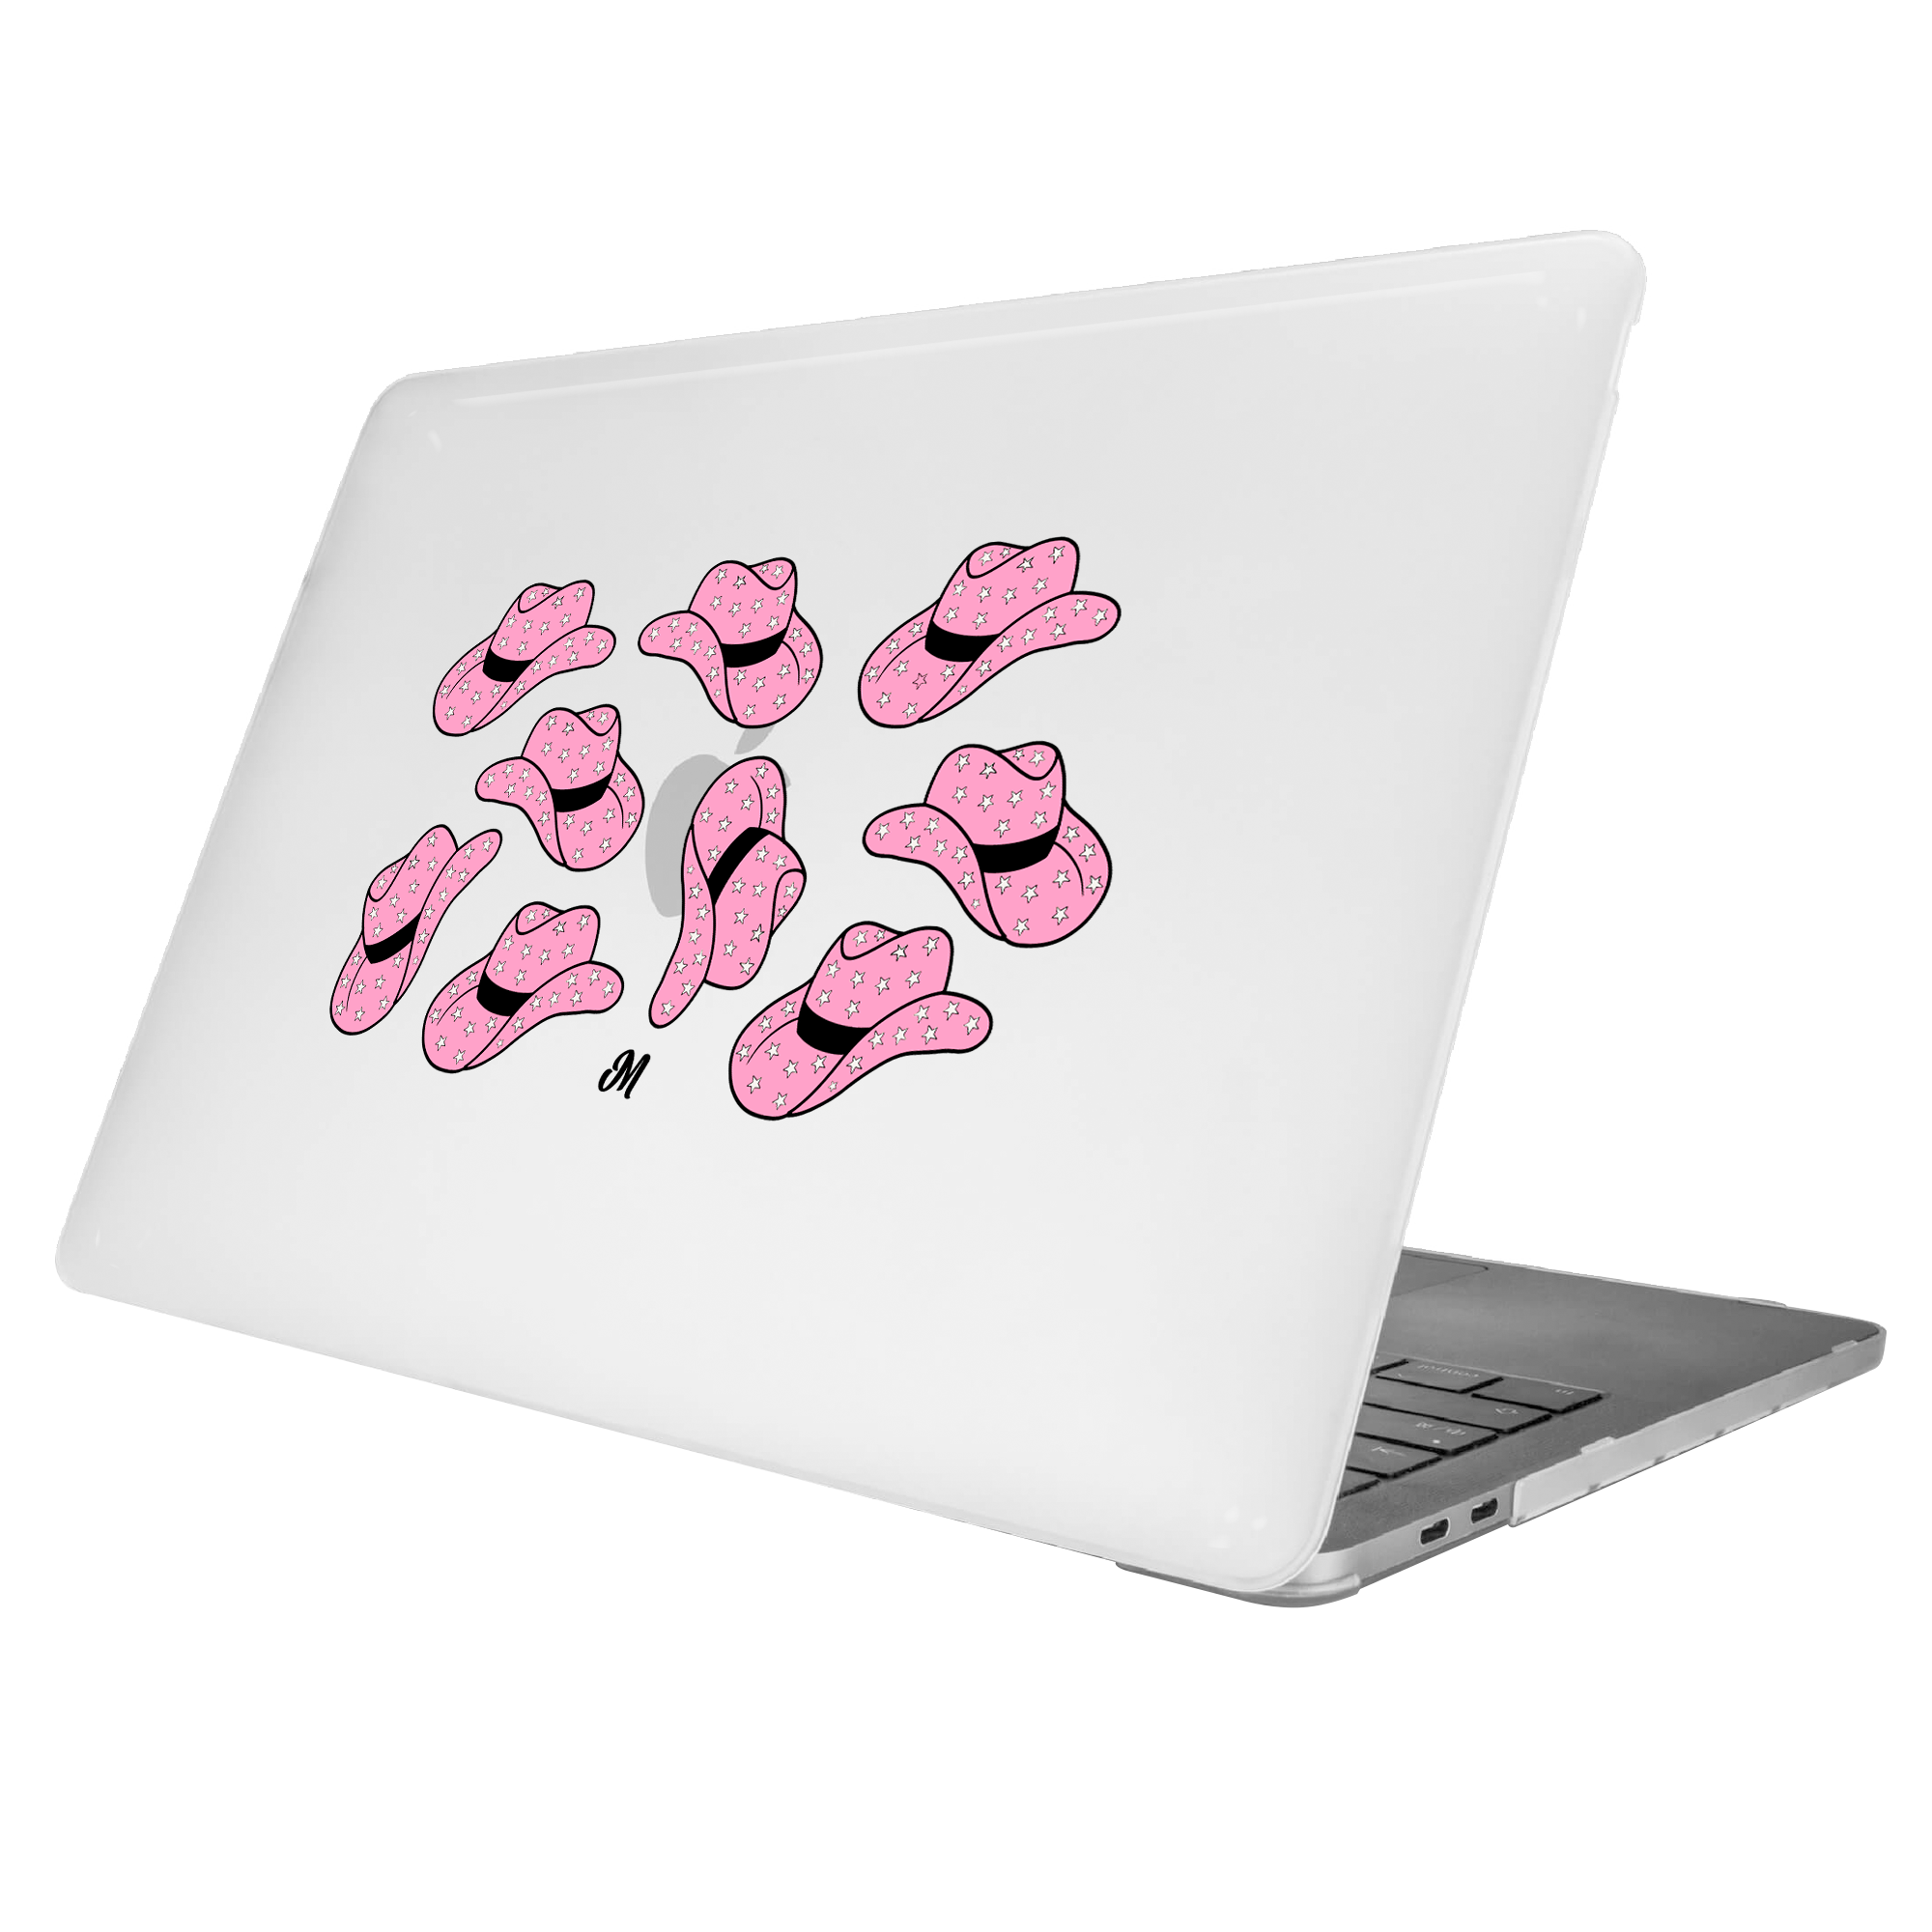 SombreroVaquera Rosado MacBook Case - Mandala Cases